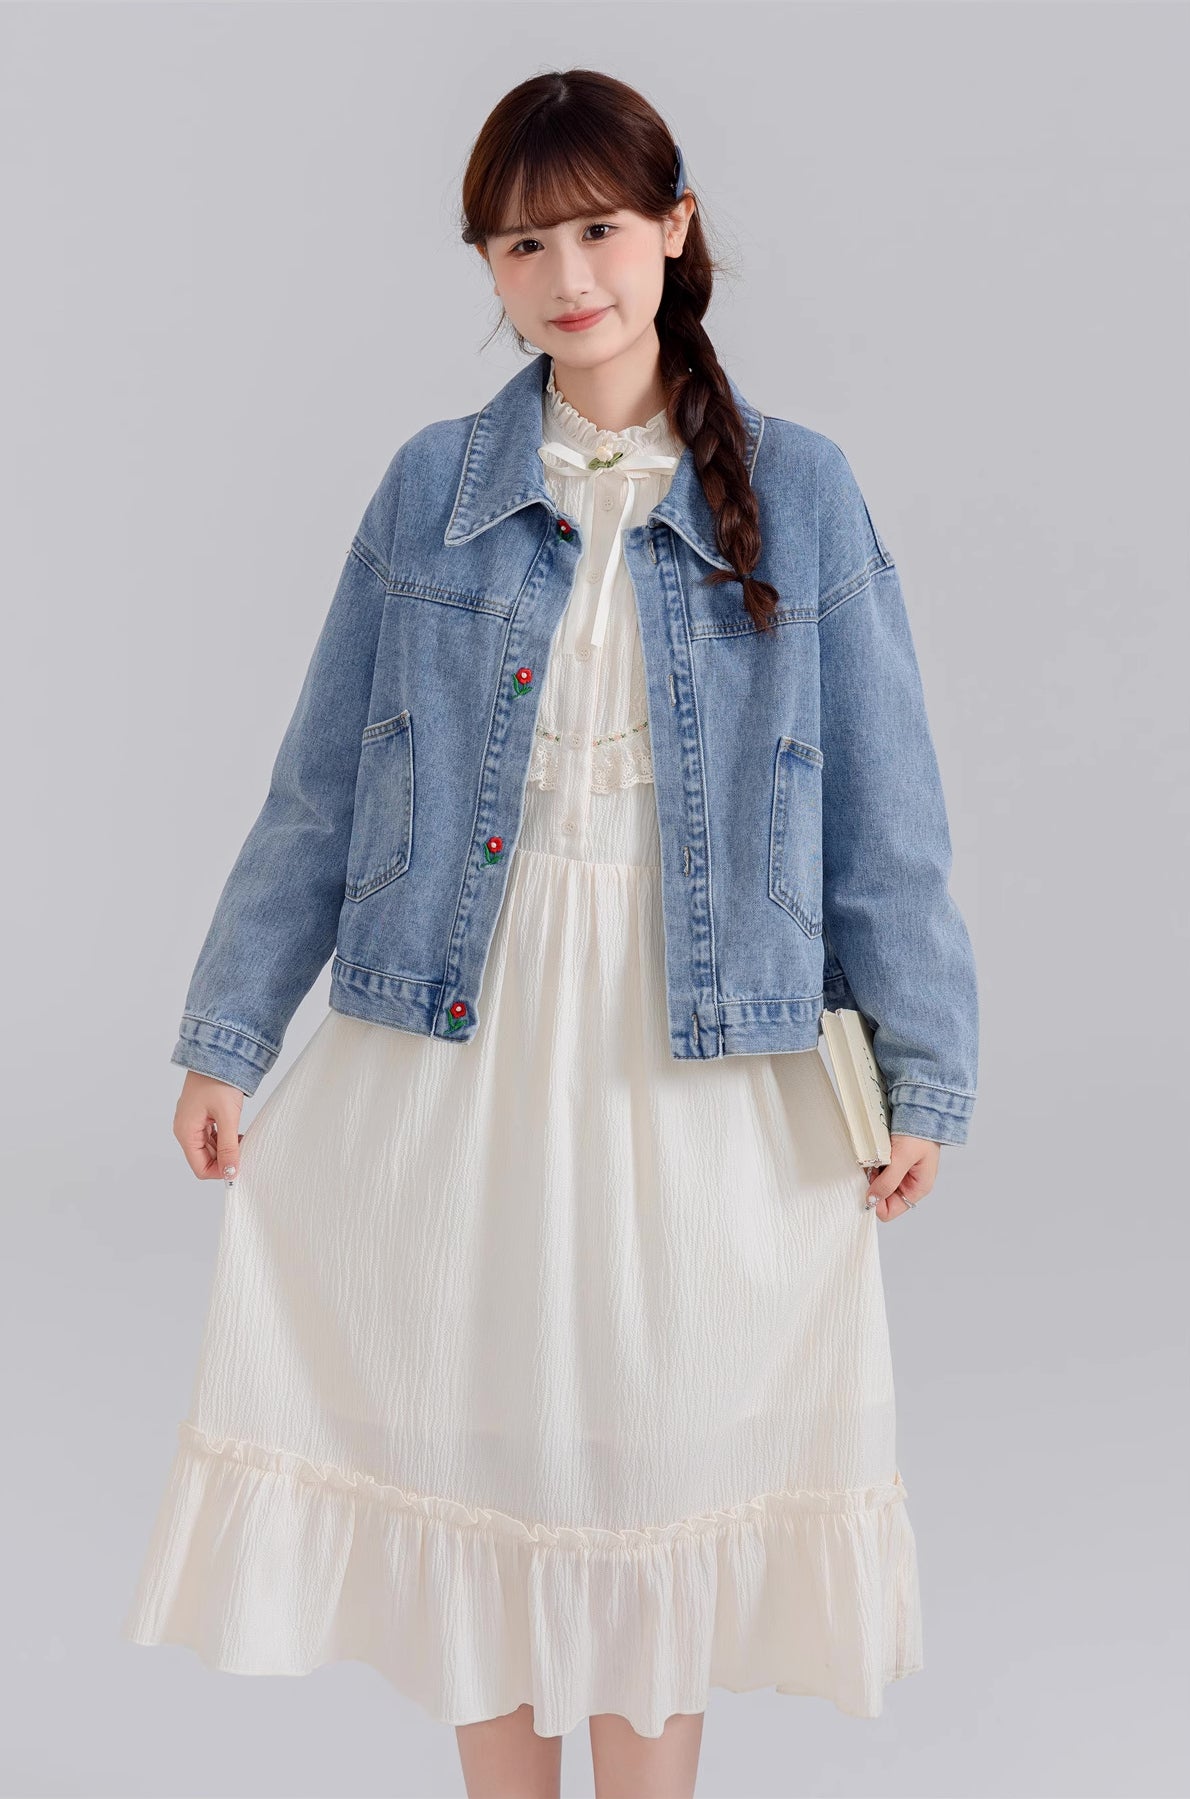 Little Rose Midi Dress (Cream)